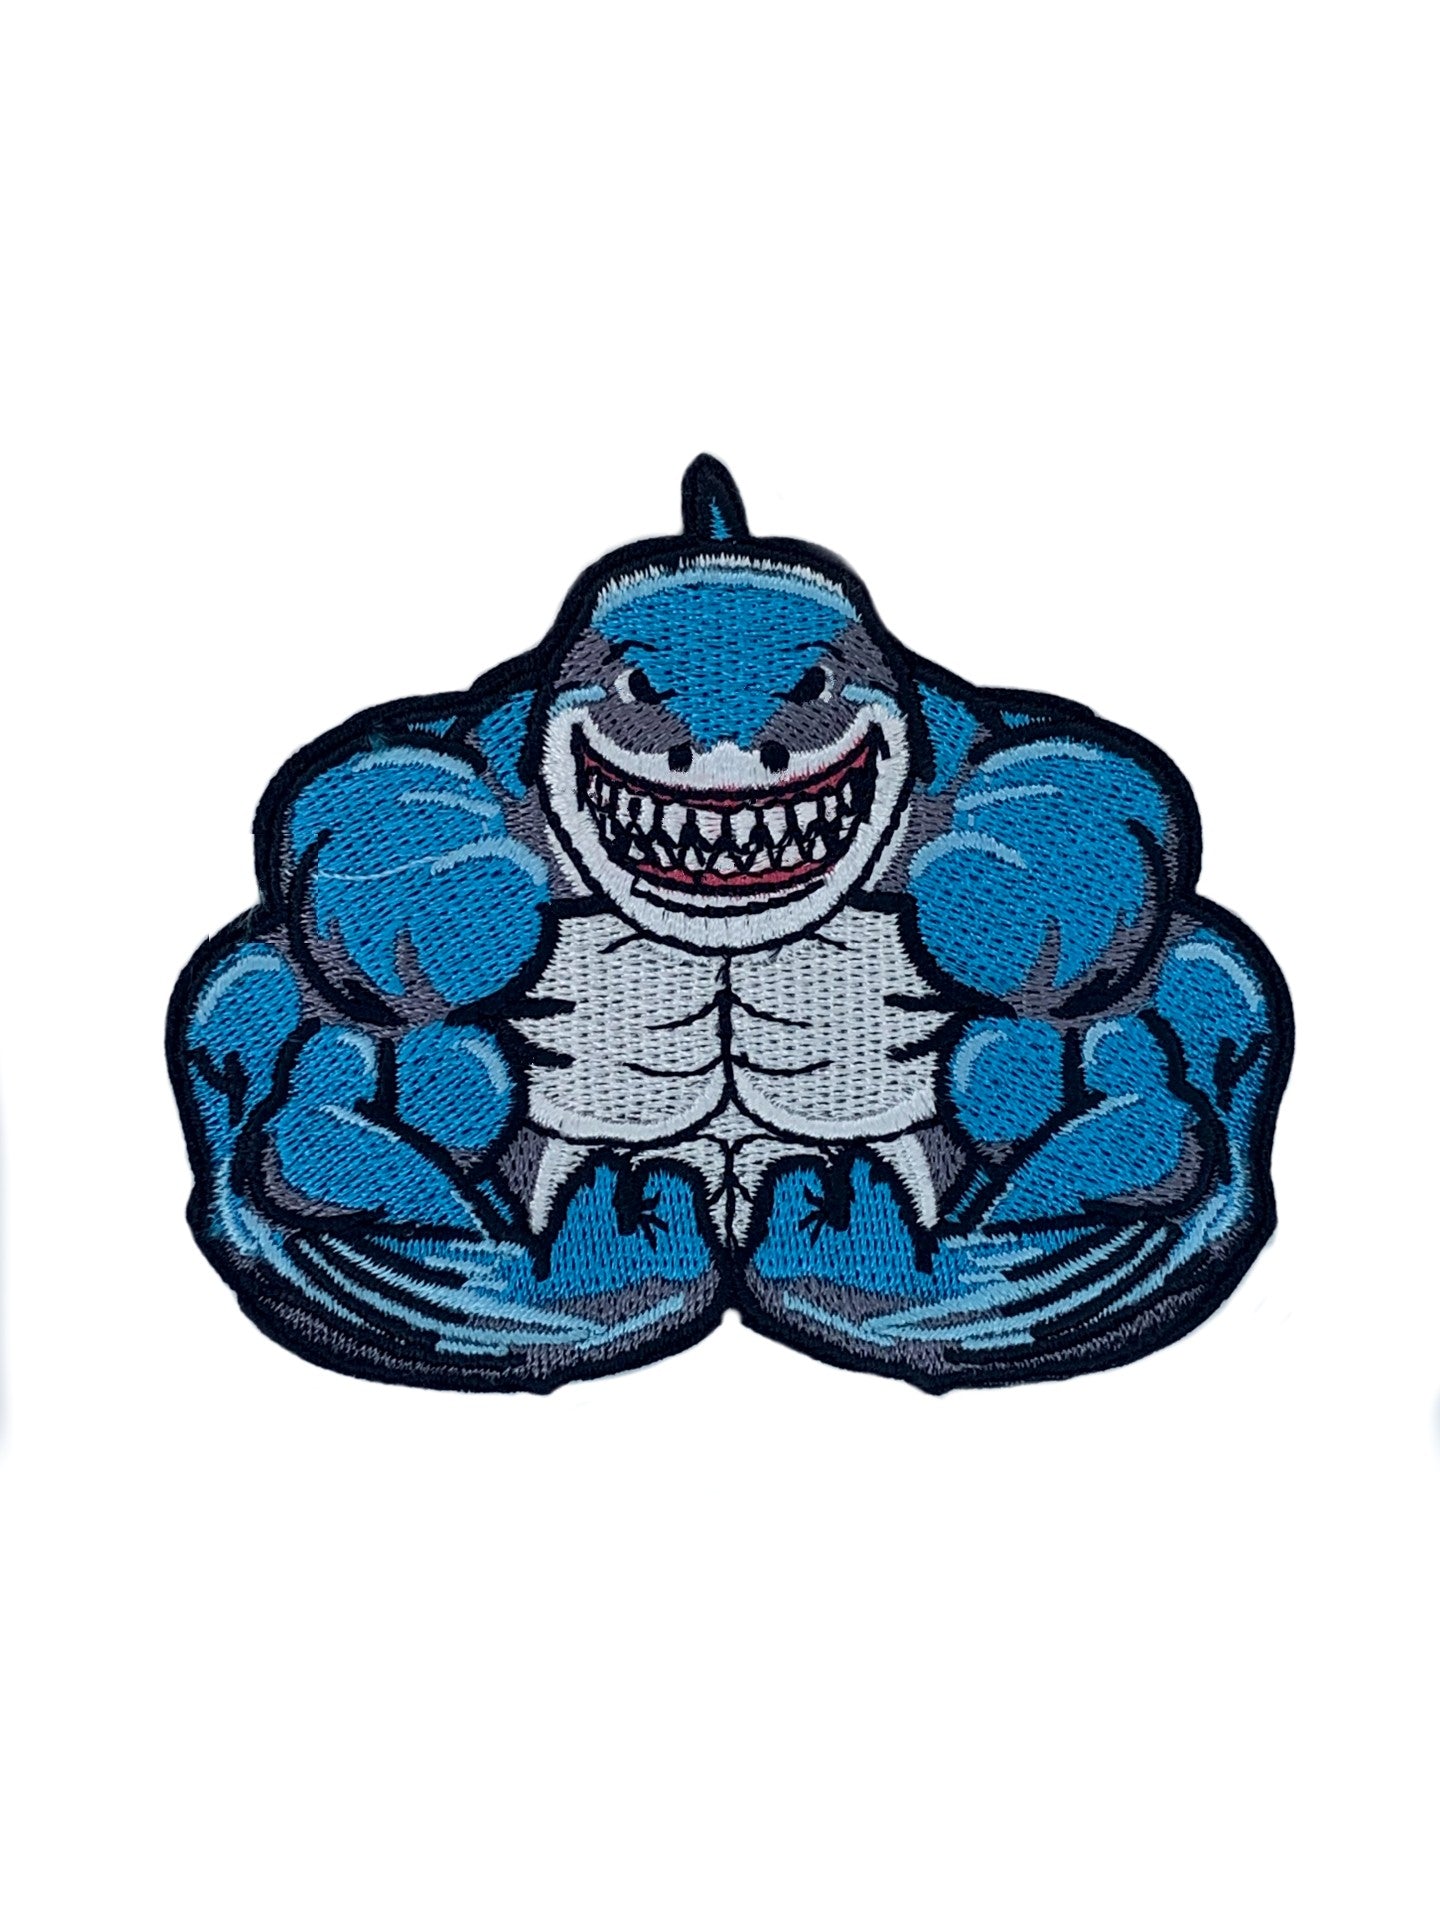 Muscle Shark Patch (3.4 Inch) Iron/Sew-on Badge Gym, Martial Arts, Self Defense, Karate, Jiu Jitsu, Judo, MMA, BJJ Mat Shark